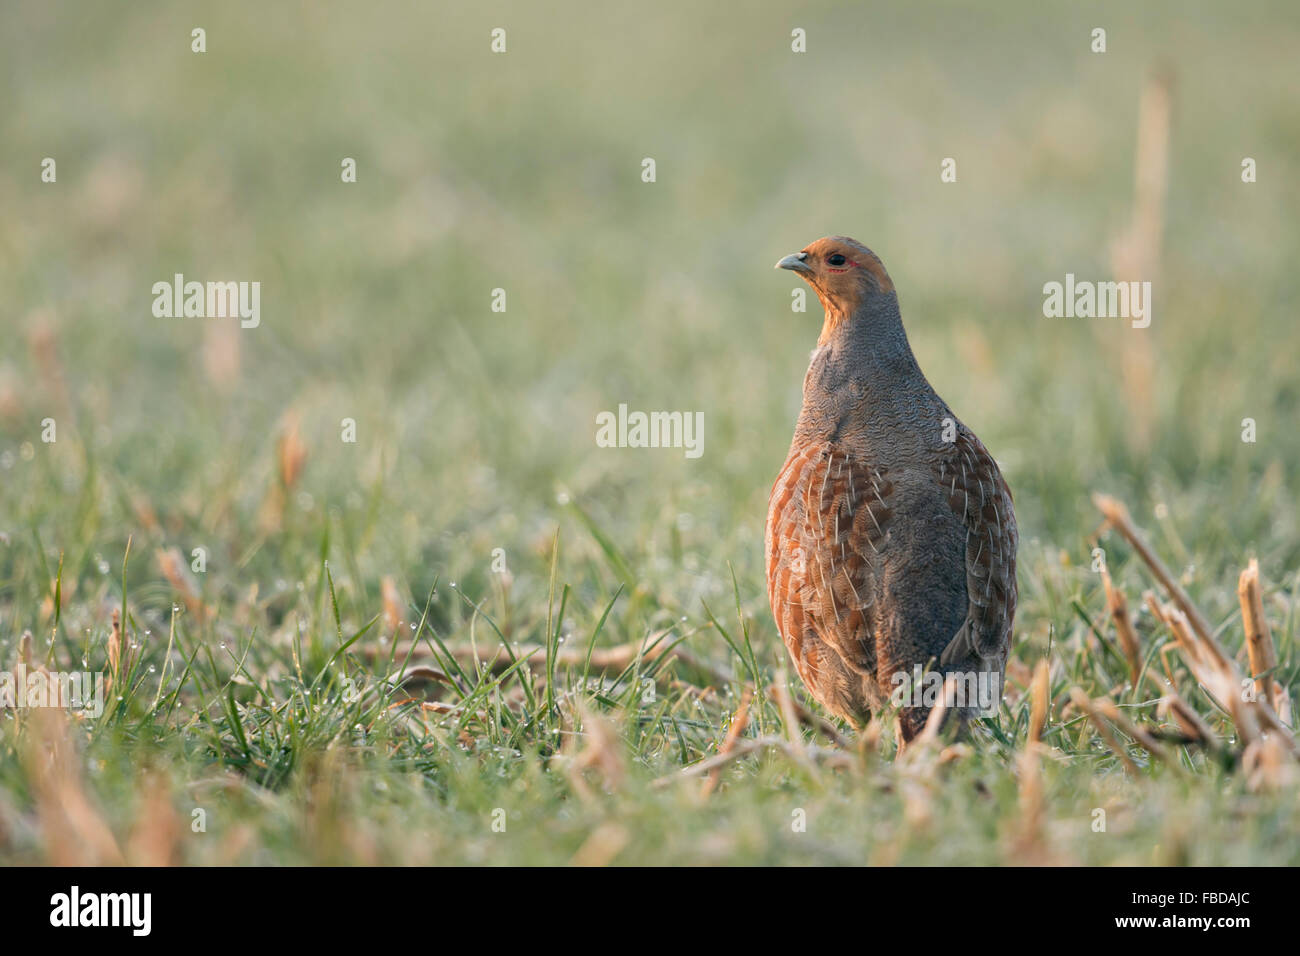 Attentive Grey partridge / Rebhuhn ( Perdix perdix ) standing upright, carefully watching around, looking alert. Stock Photo